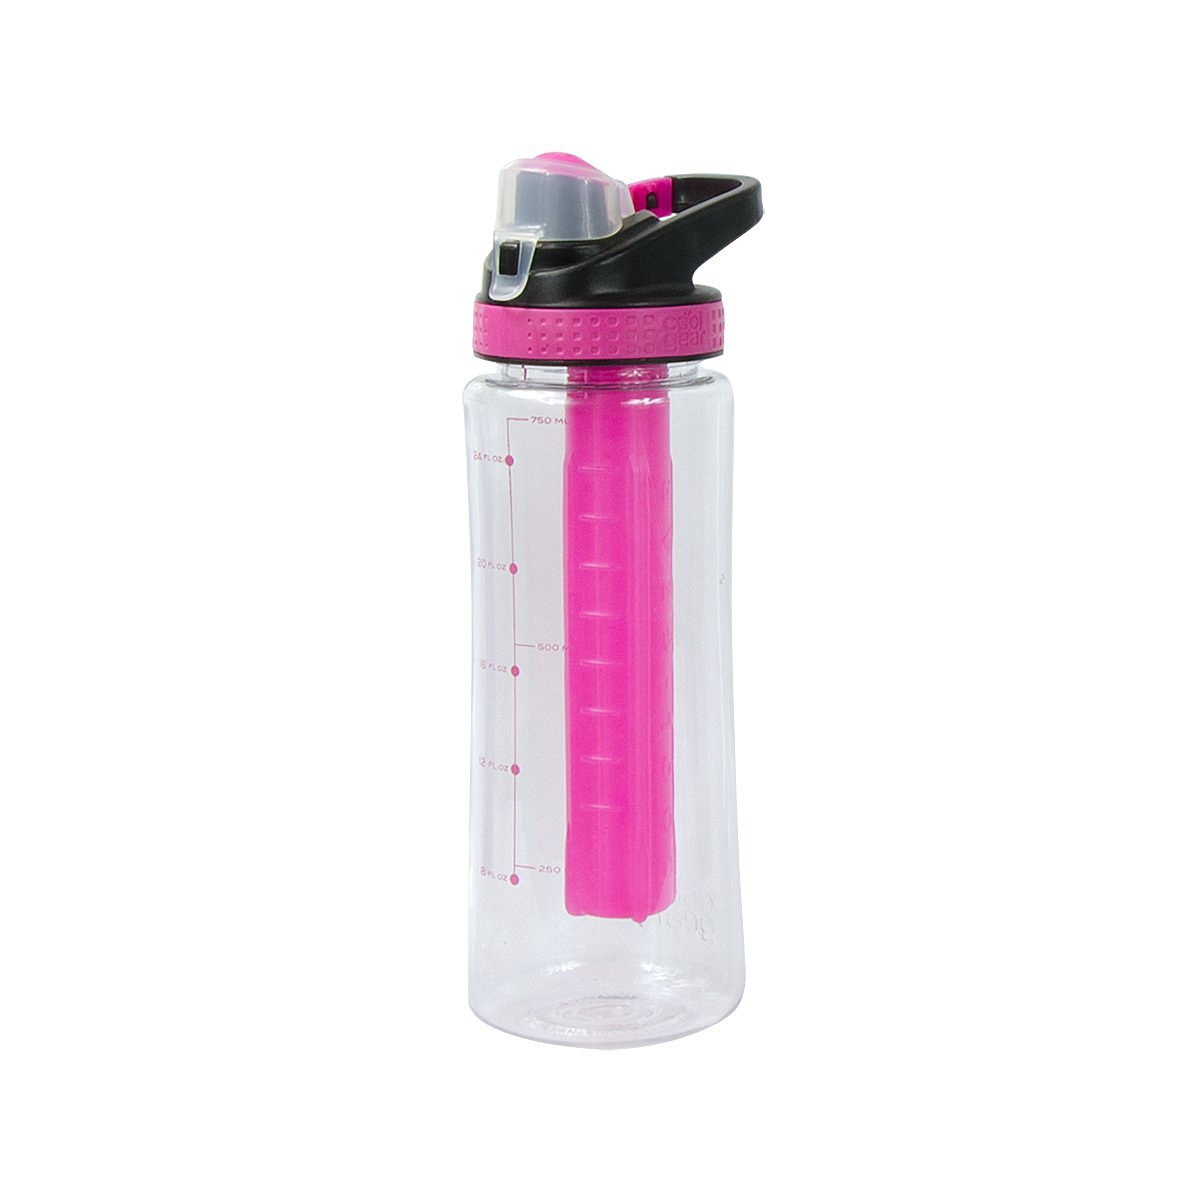 Ez-freeze Subzero 'Pink' 828ml with Snap Lock Clip Freeze Bottle